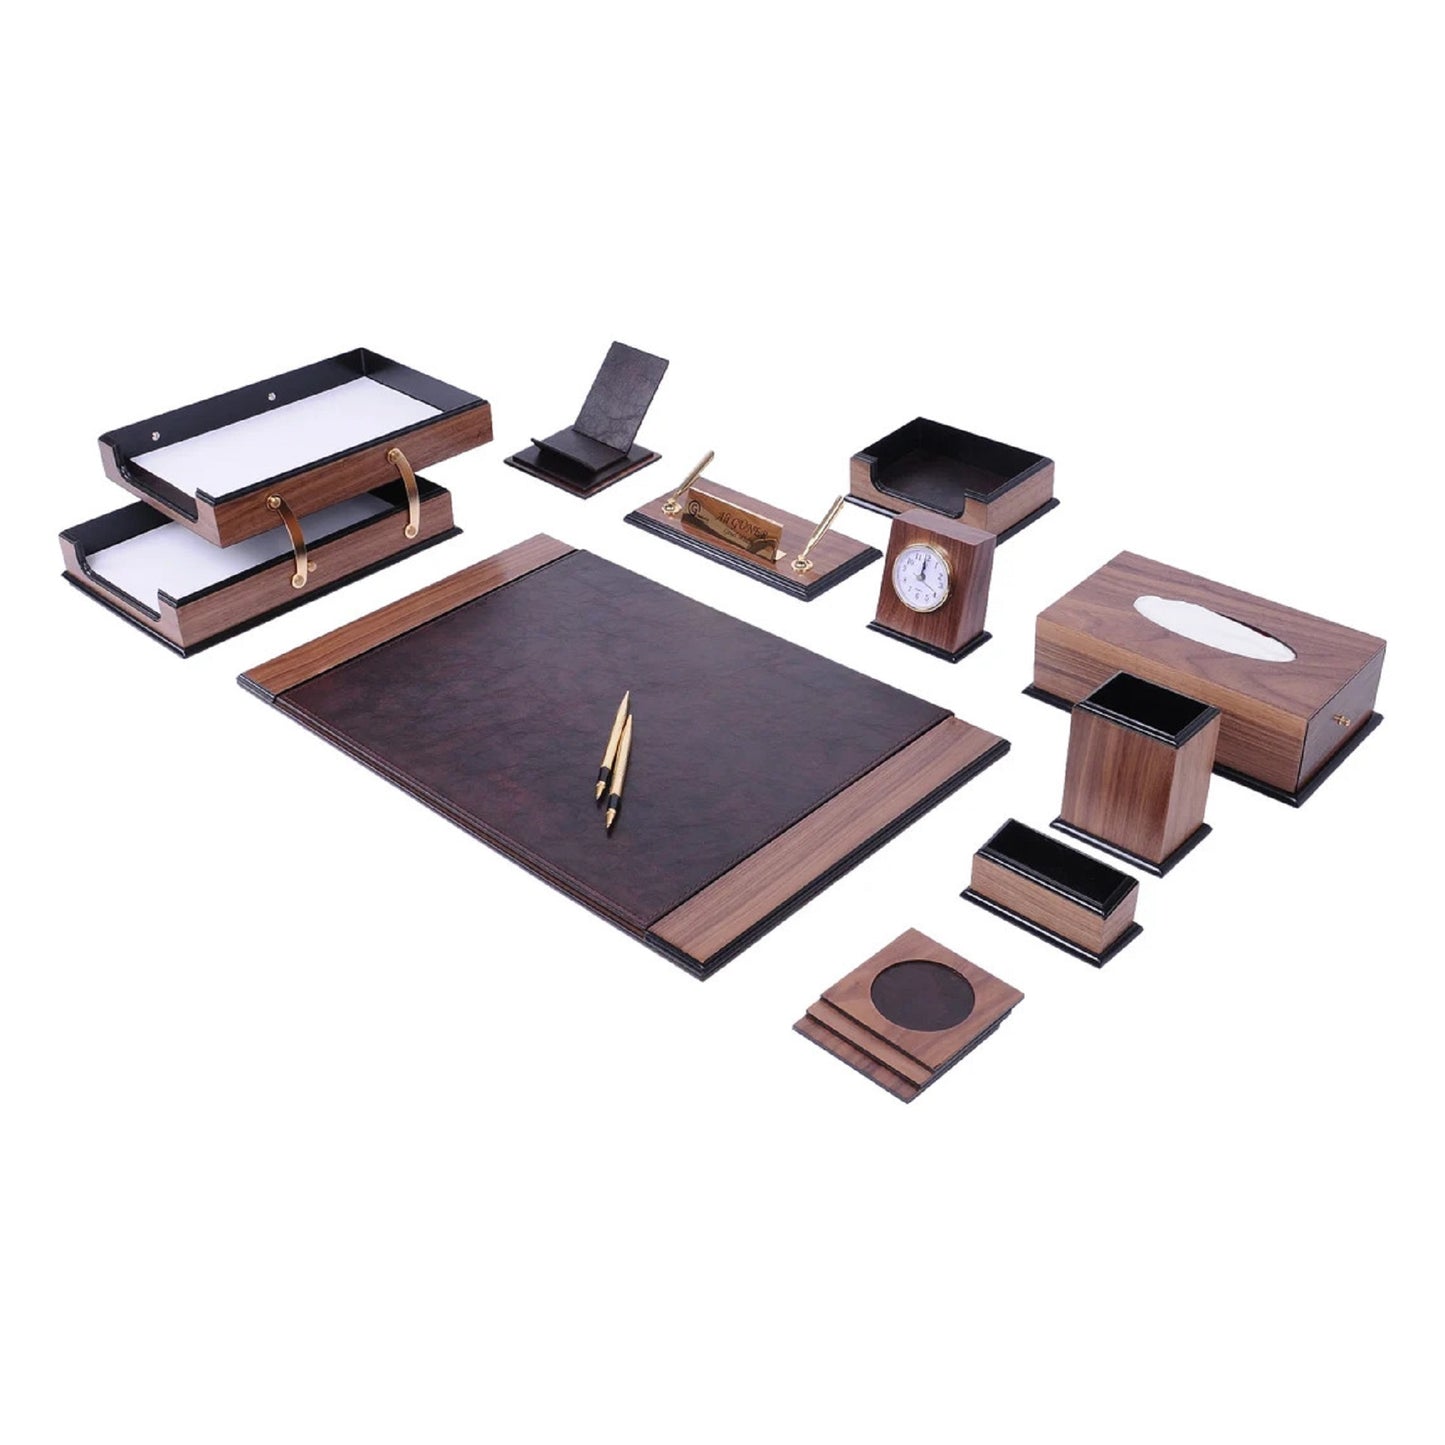 MOOG Prestige Wood Desk Set 12PCS-Black Office Product-Set-Leather Desk Organizer-Combination-Best Gift-Leather Desk Set-Customizable Blotter Pad- 12 PCS